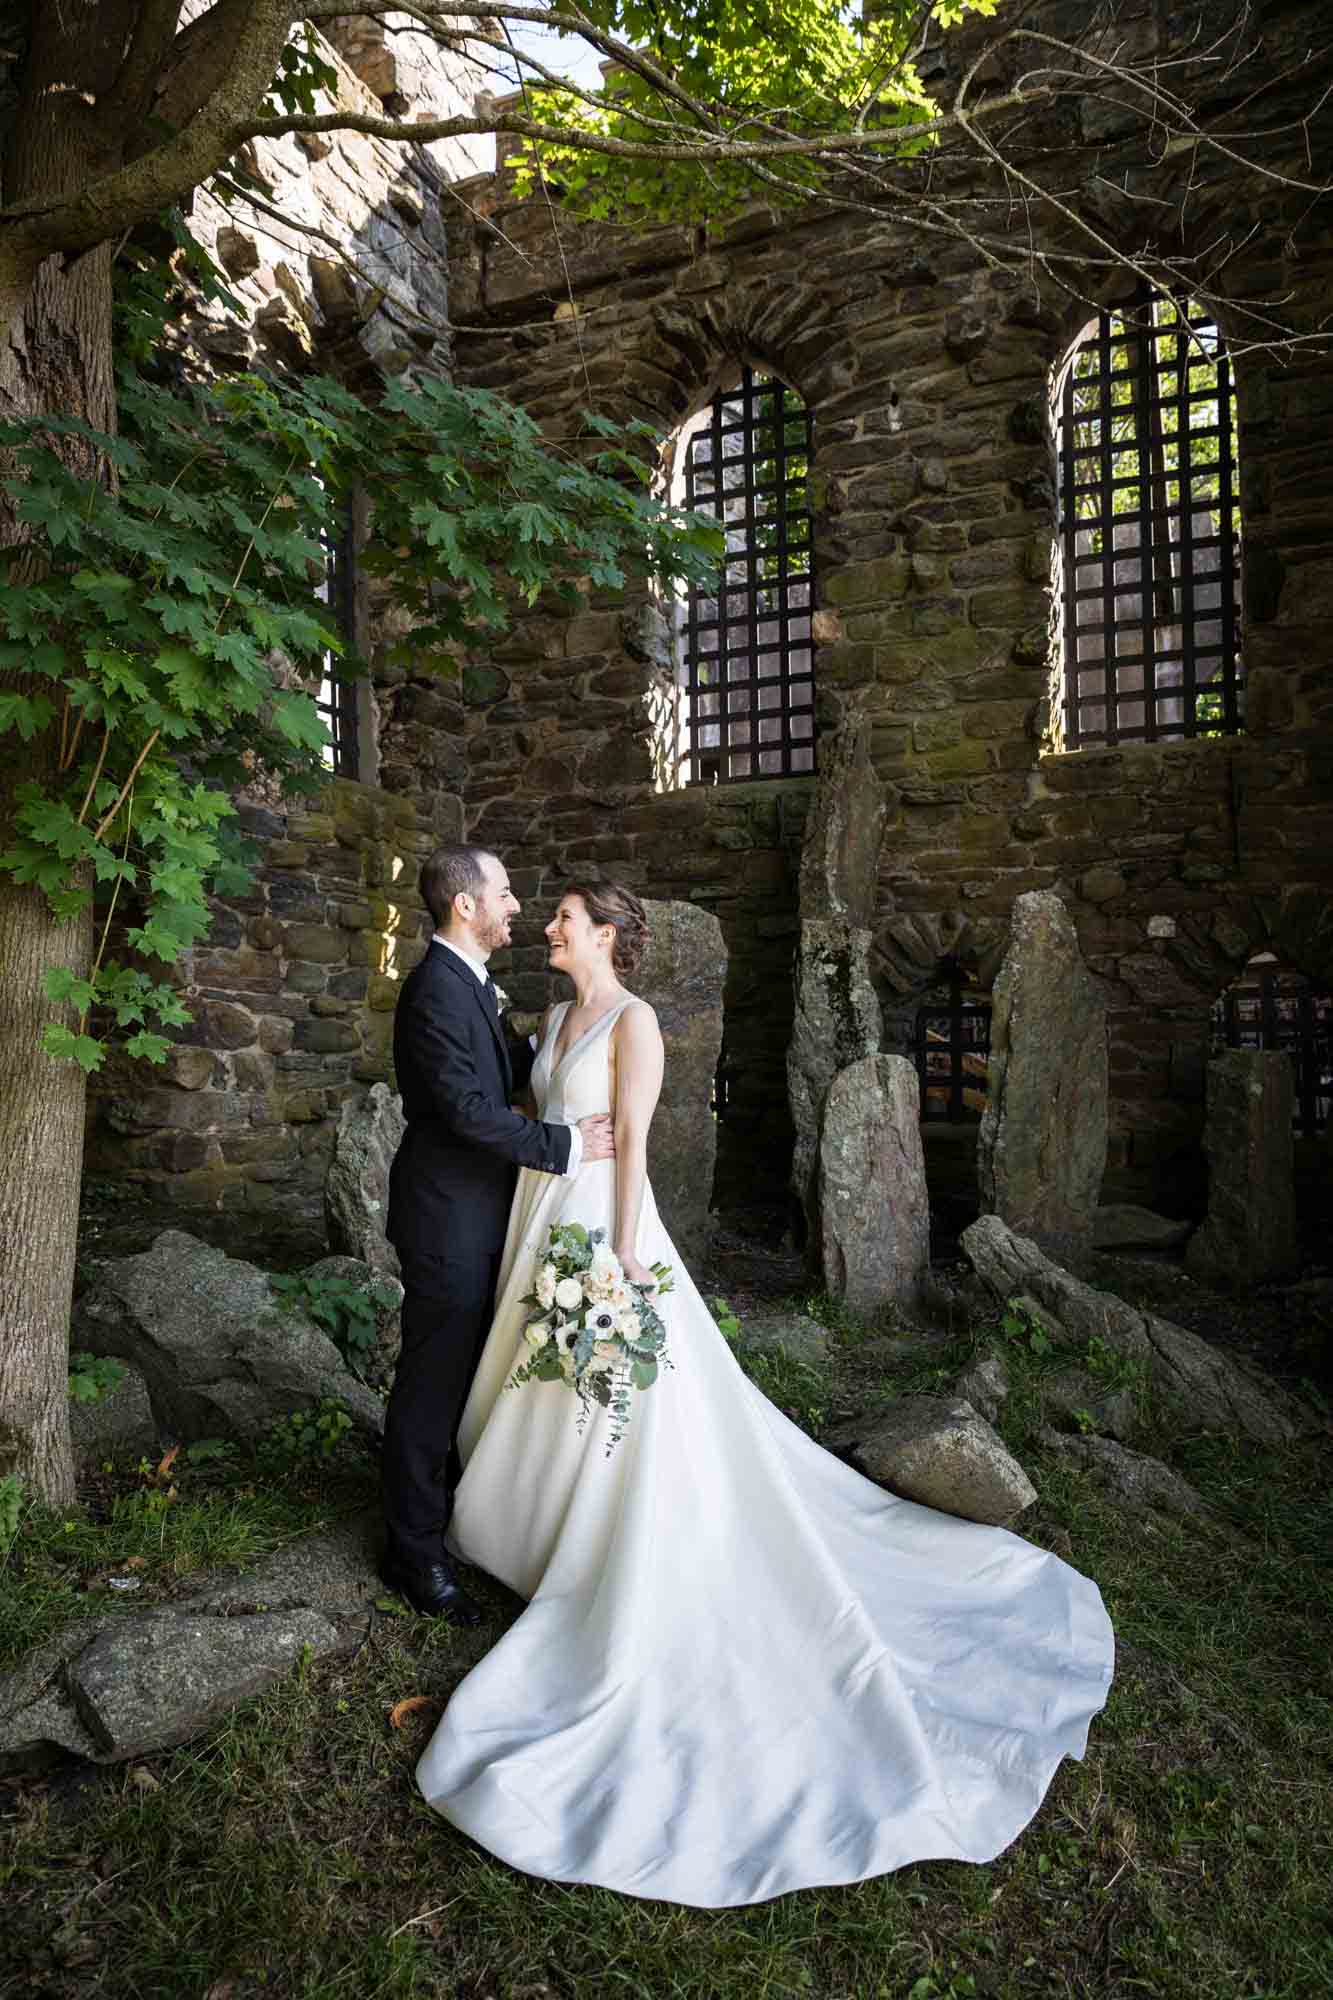 Glen Island Park wedding photo of bride and groom in front of castle ruins